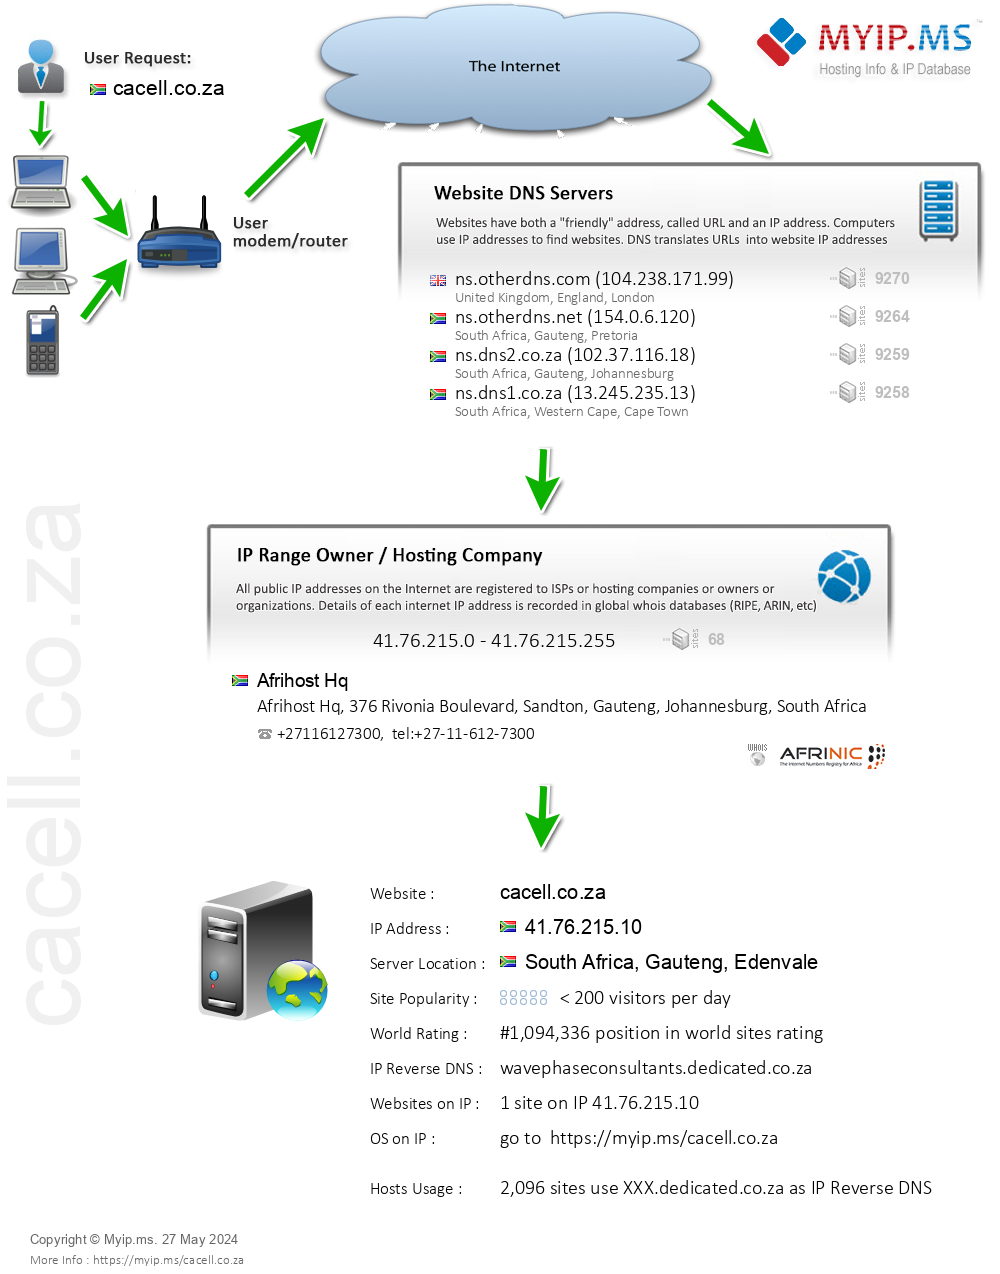 Cacell.co.za - Website Hosting Visual IP Diagram